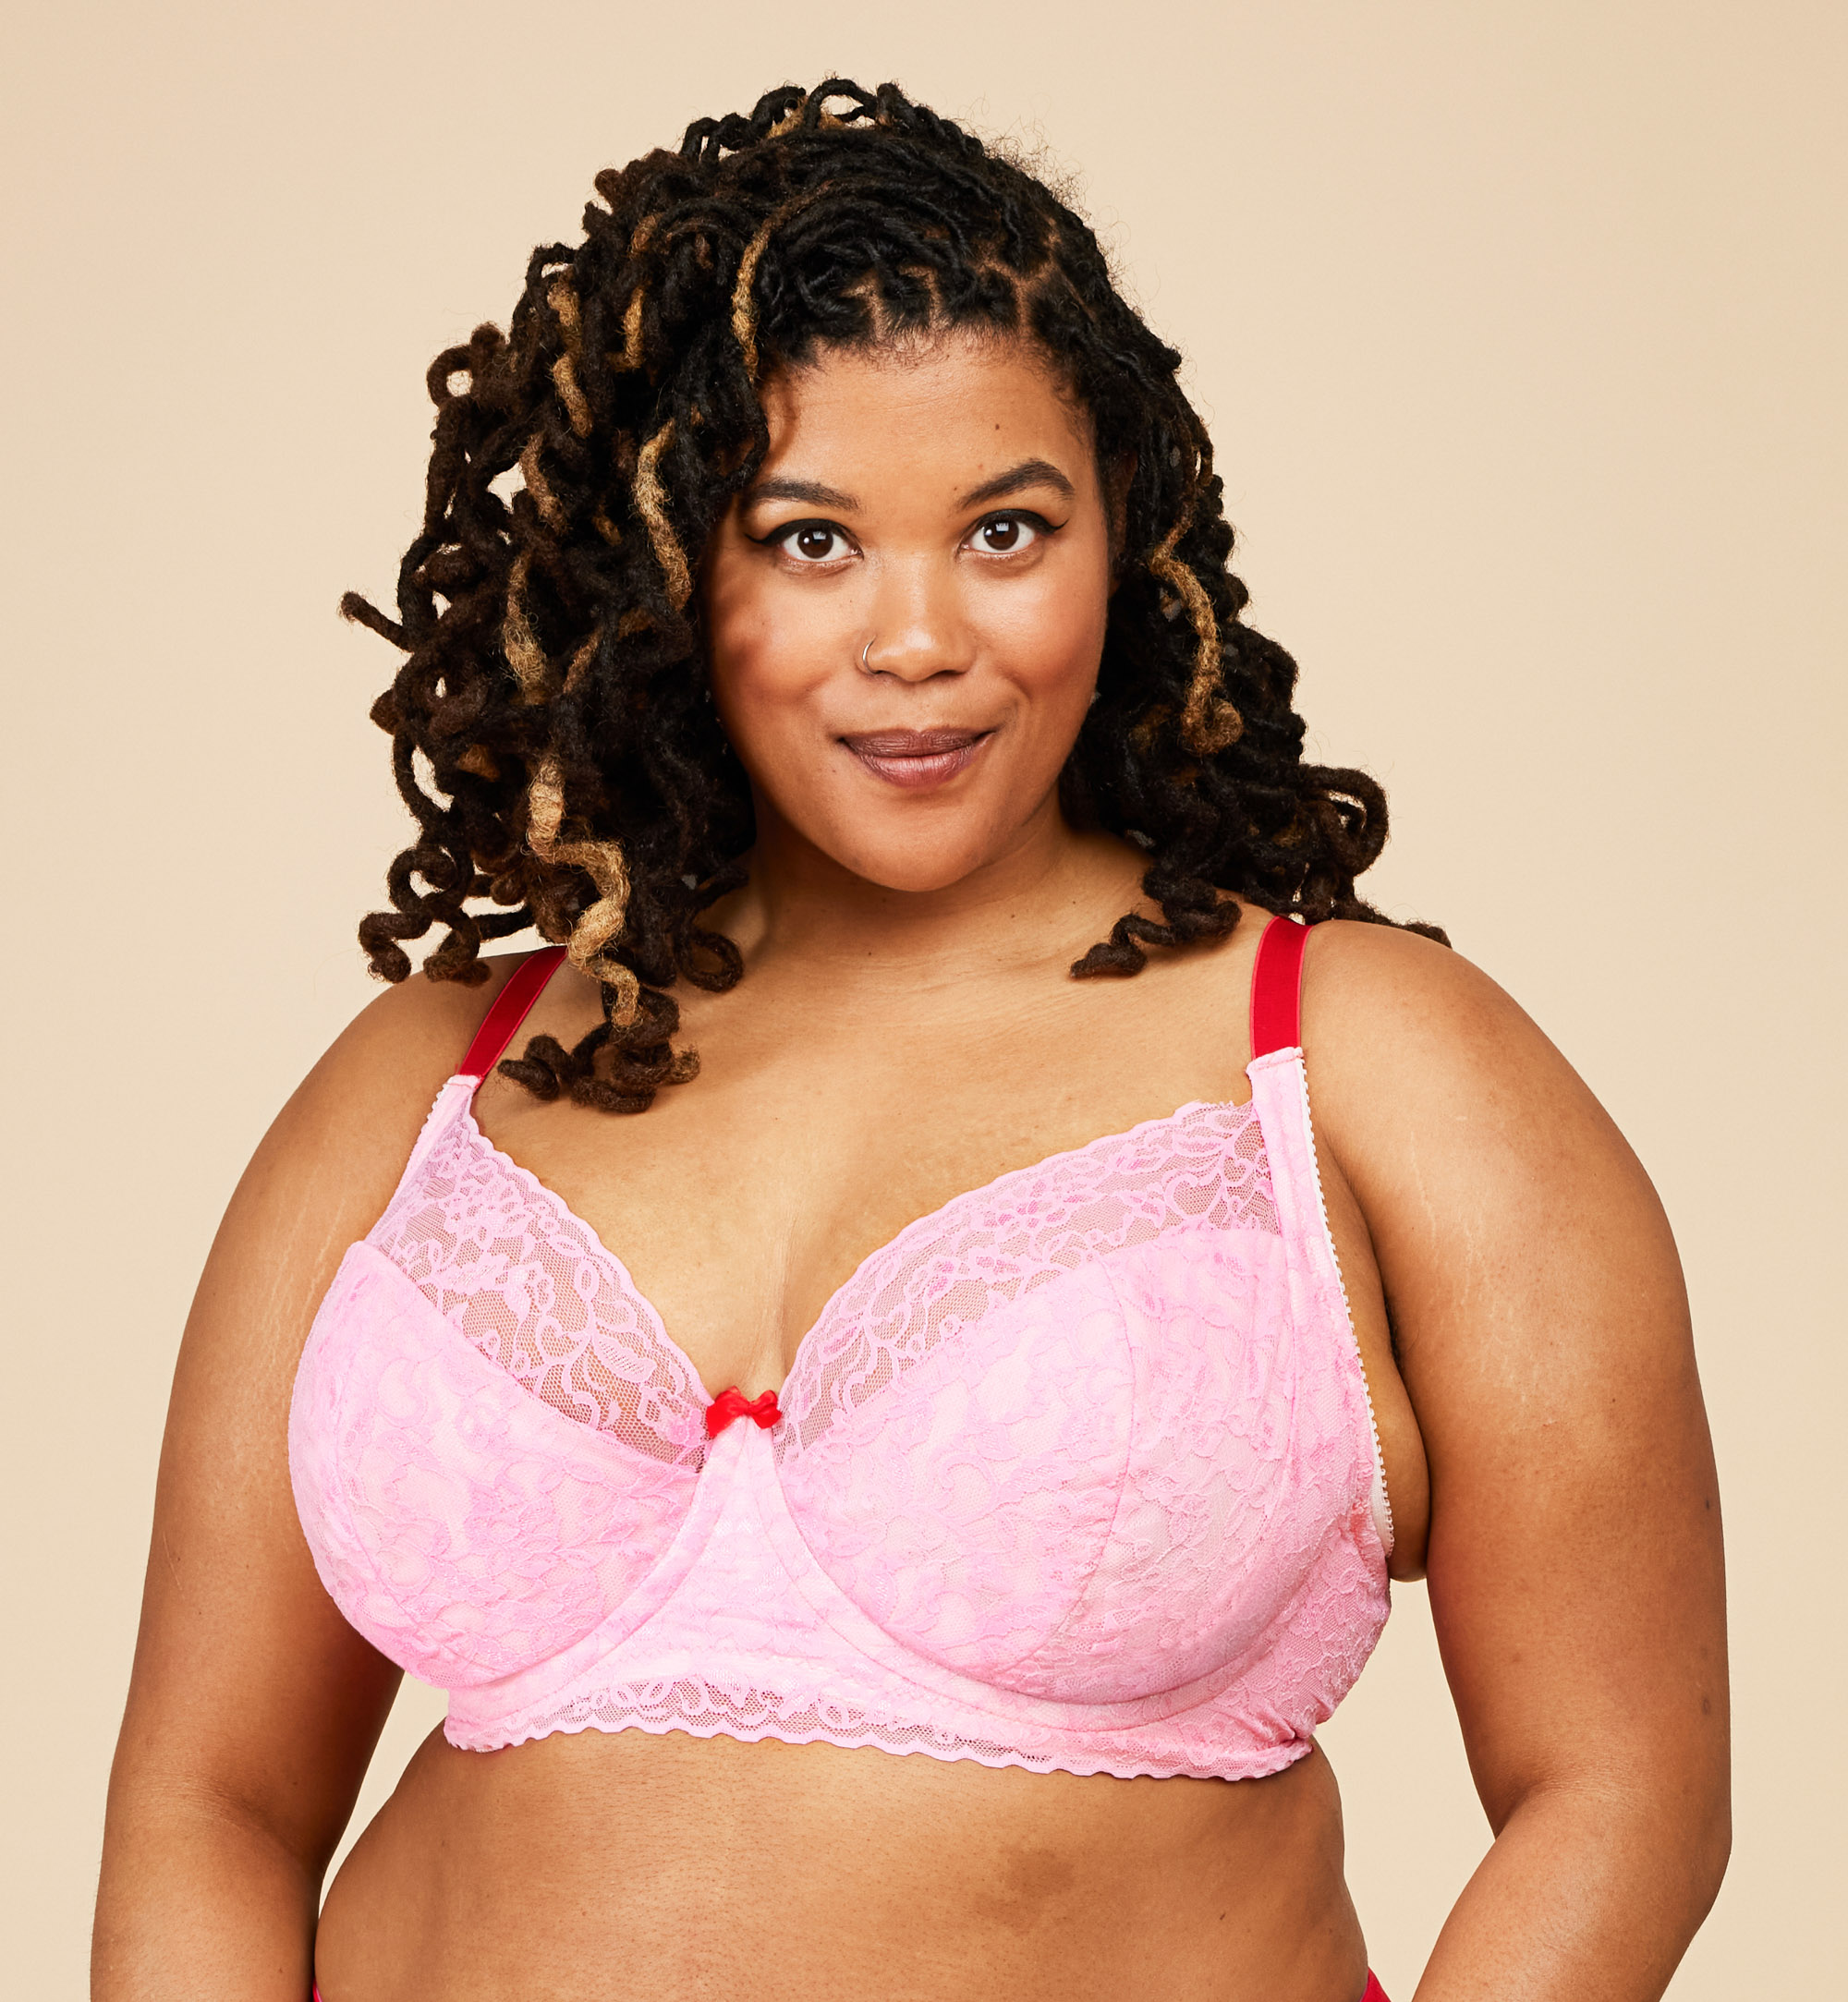 Lace up bra pattern plus size, Bridget, Sizes 29-33